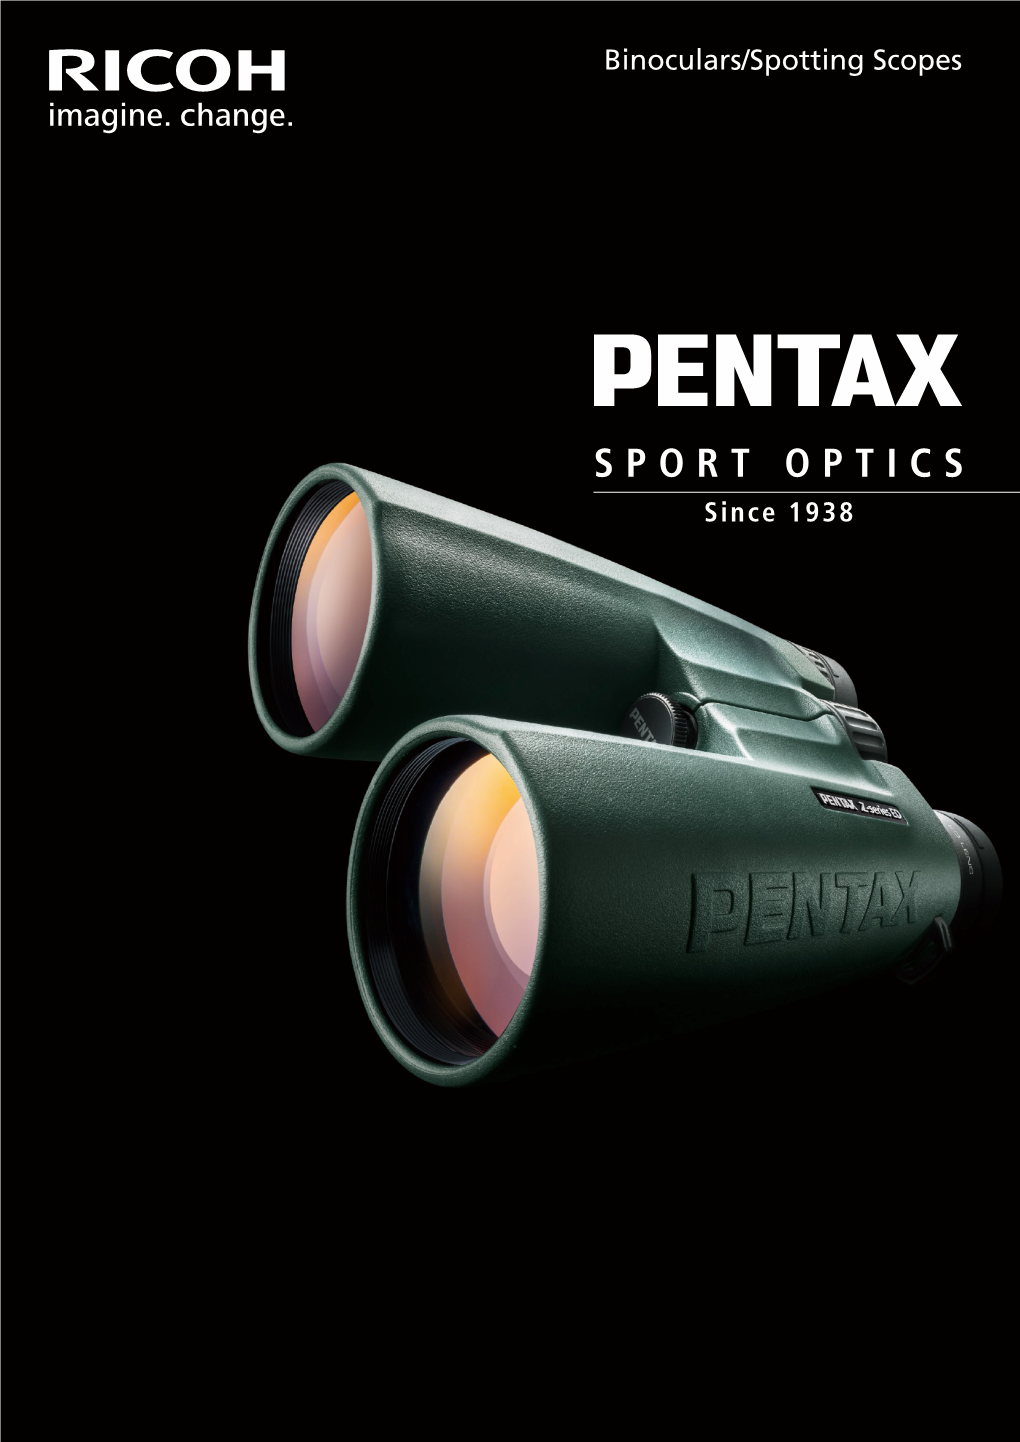 PENTAX Binoculars/Spotting Scopes